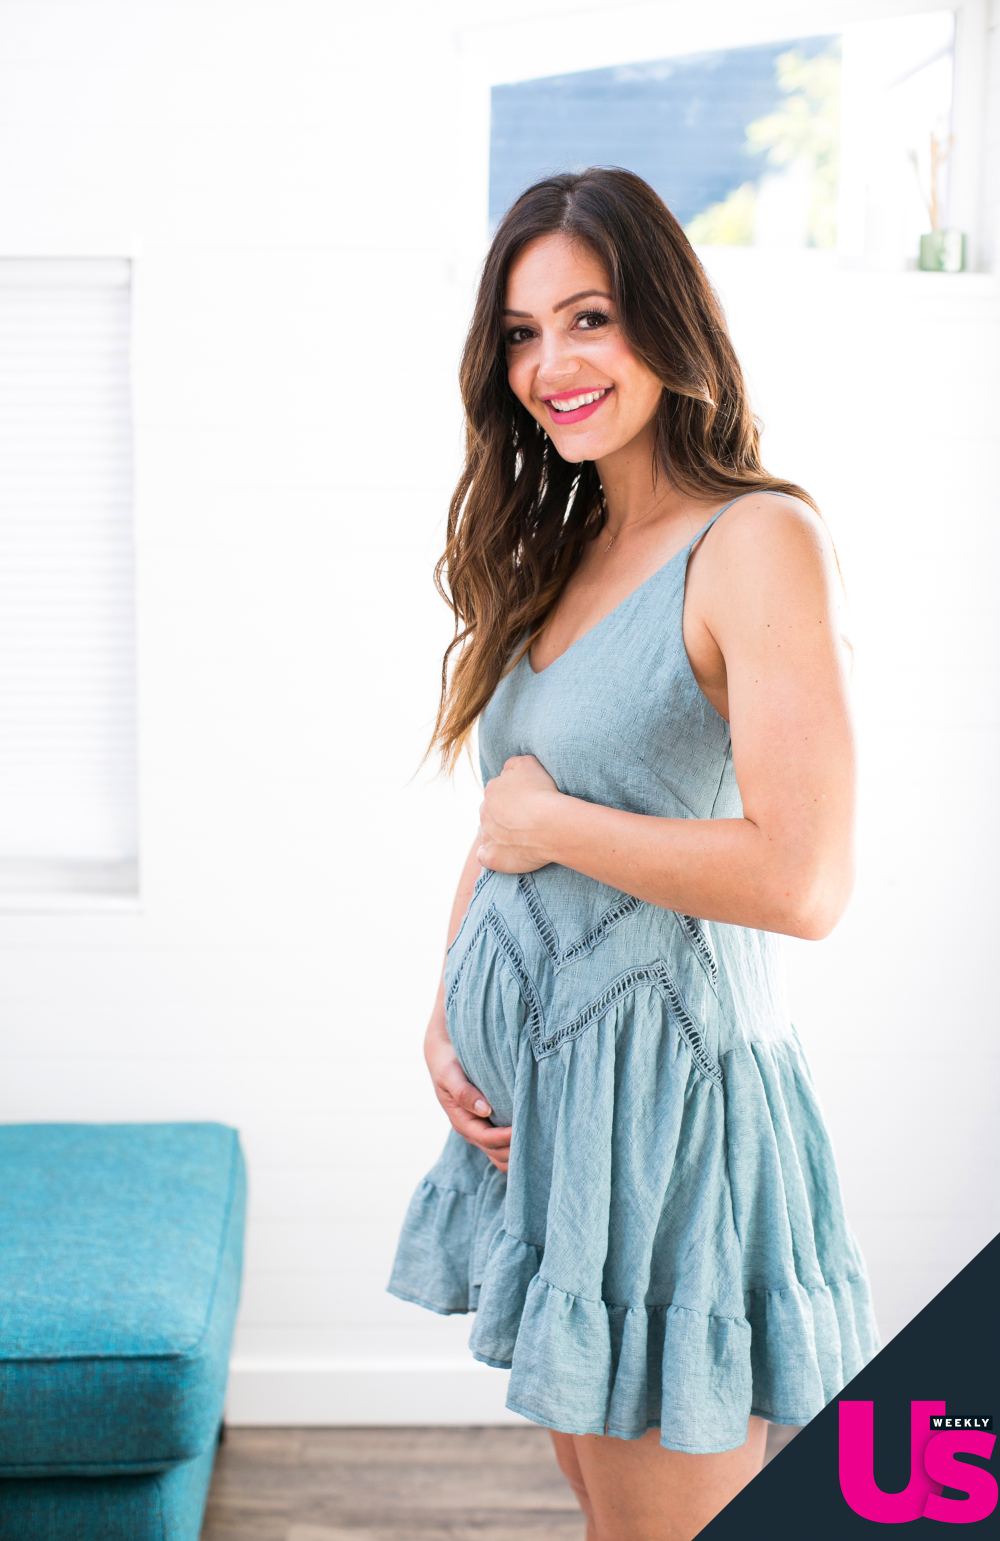 Desiree Hartsock is pregnant